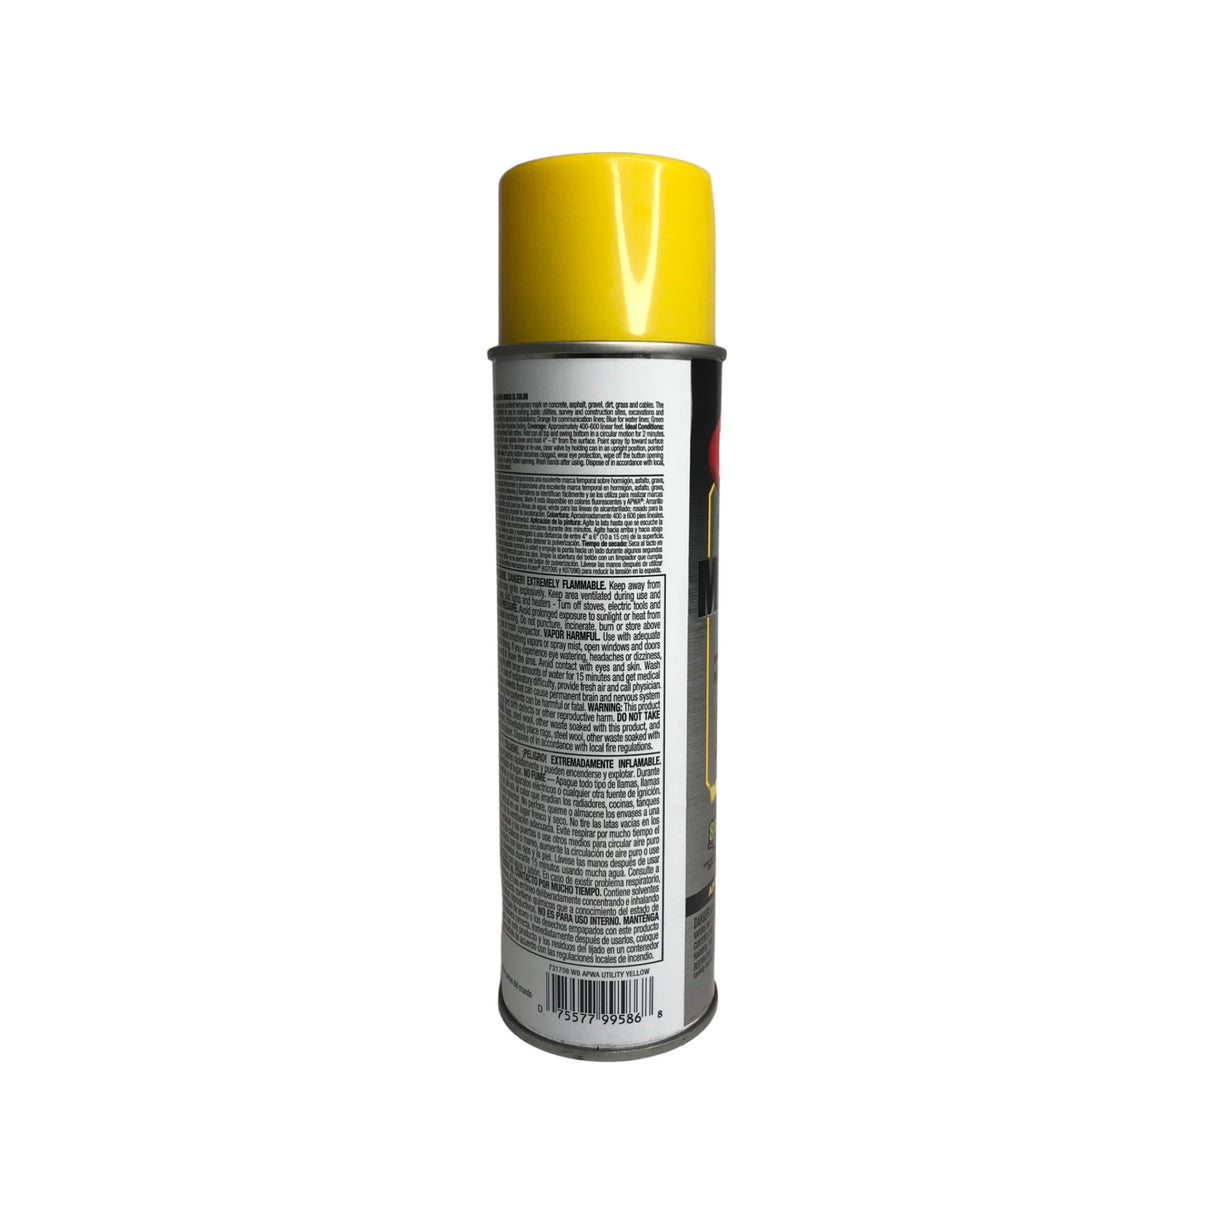 Krylon 731708 - 2 PACK Mark-It WB Inverted Marking Paint - APWA Utility Yellow